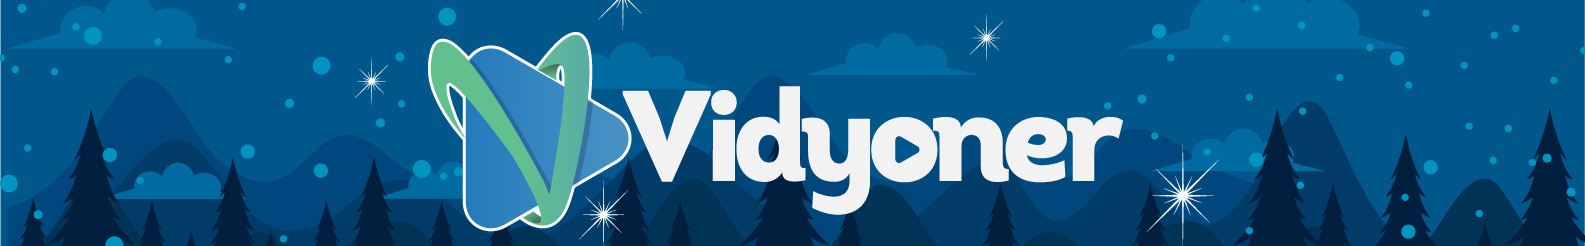 Vidyoner 2D Animation's profile banner